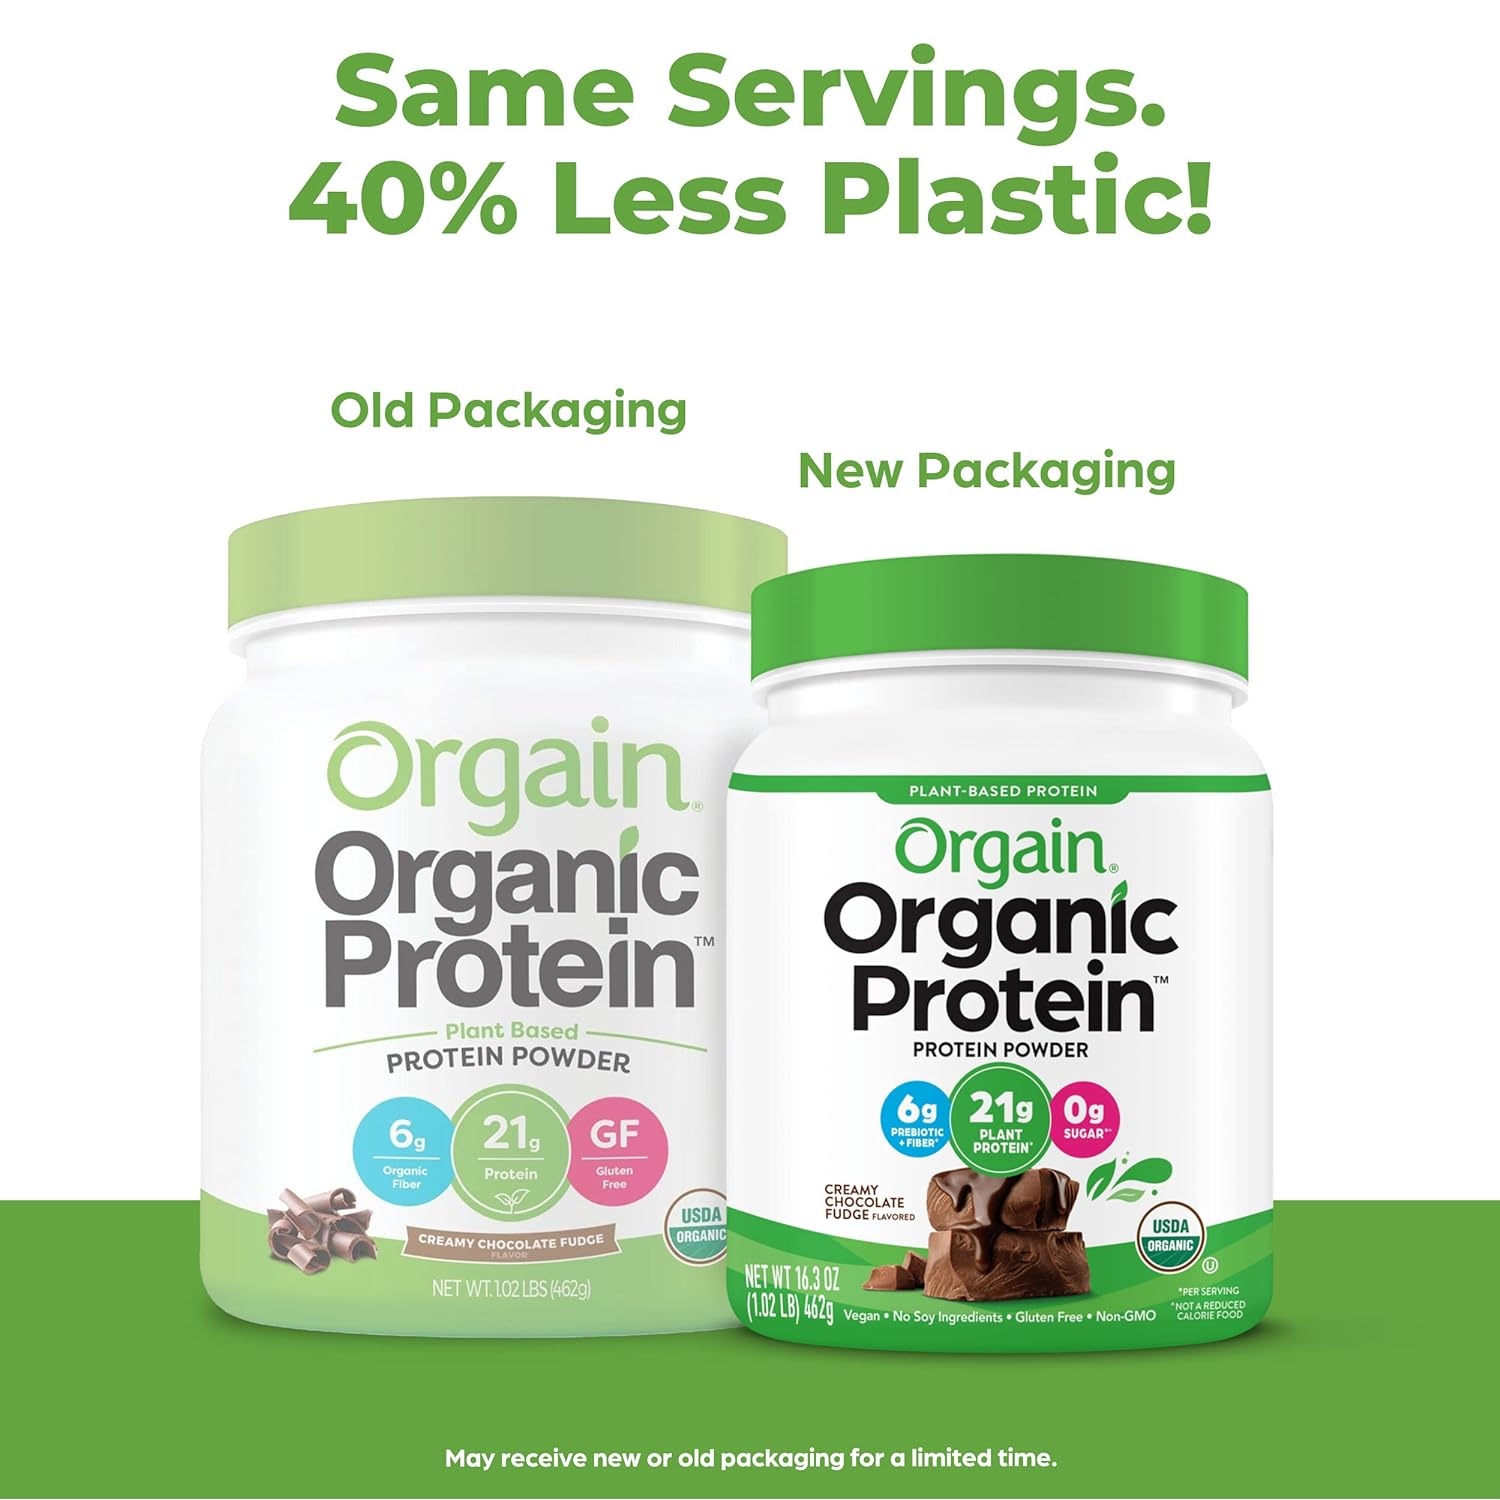 Orgain Organic Plant Based Protein Powder, Creamy Chocolate Fudge - 21g of Protein, Vegan, Low Net Carbs, Non Dairy, Gluten Free, Lactose Free, No Sugar Added, Soy Free, Kosher, 1.02 Pound